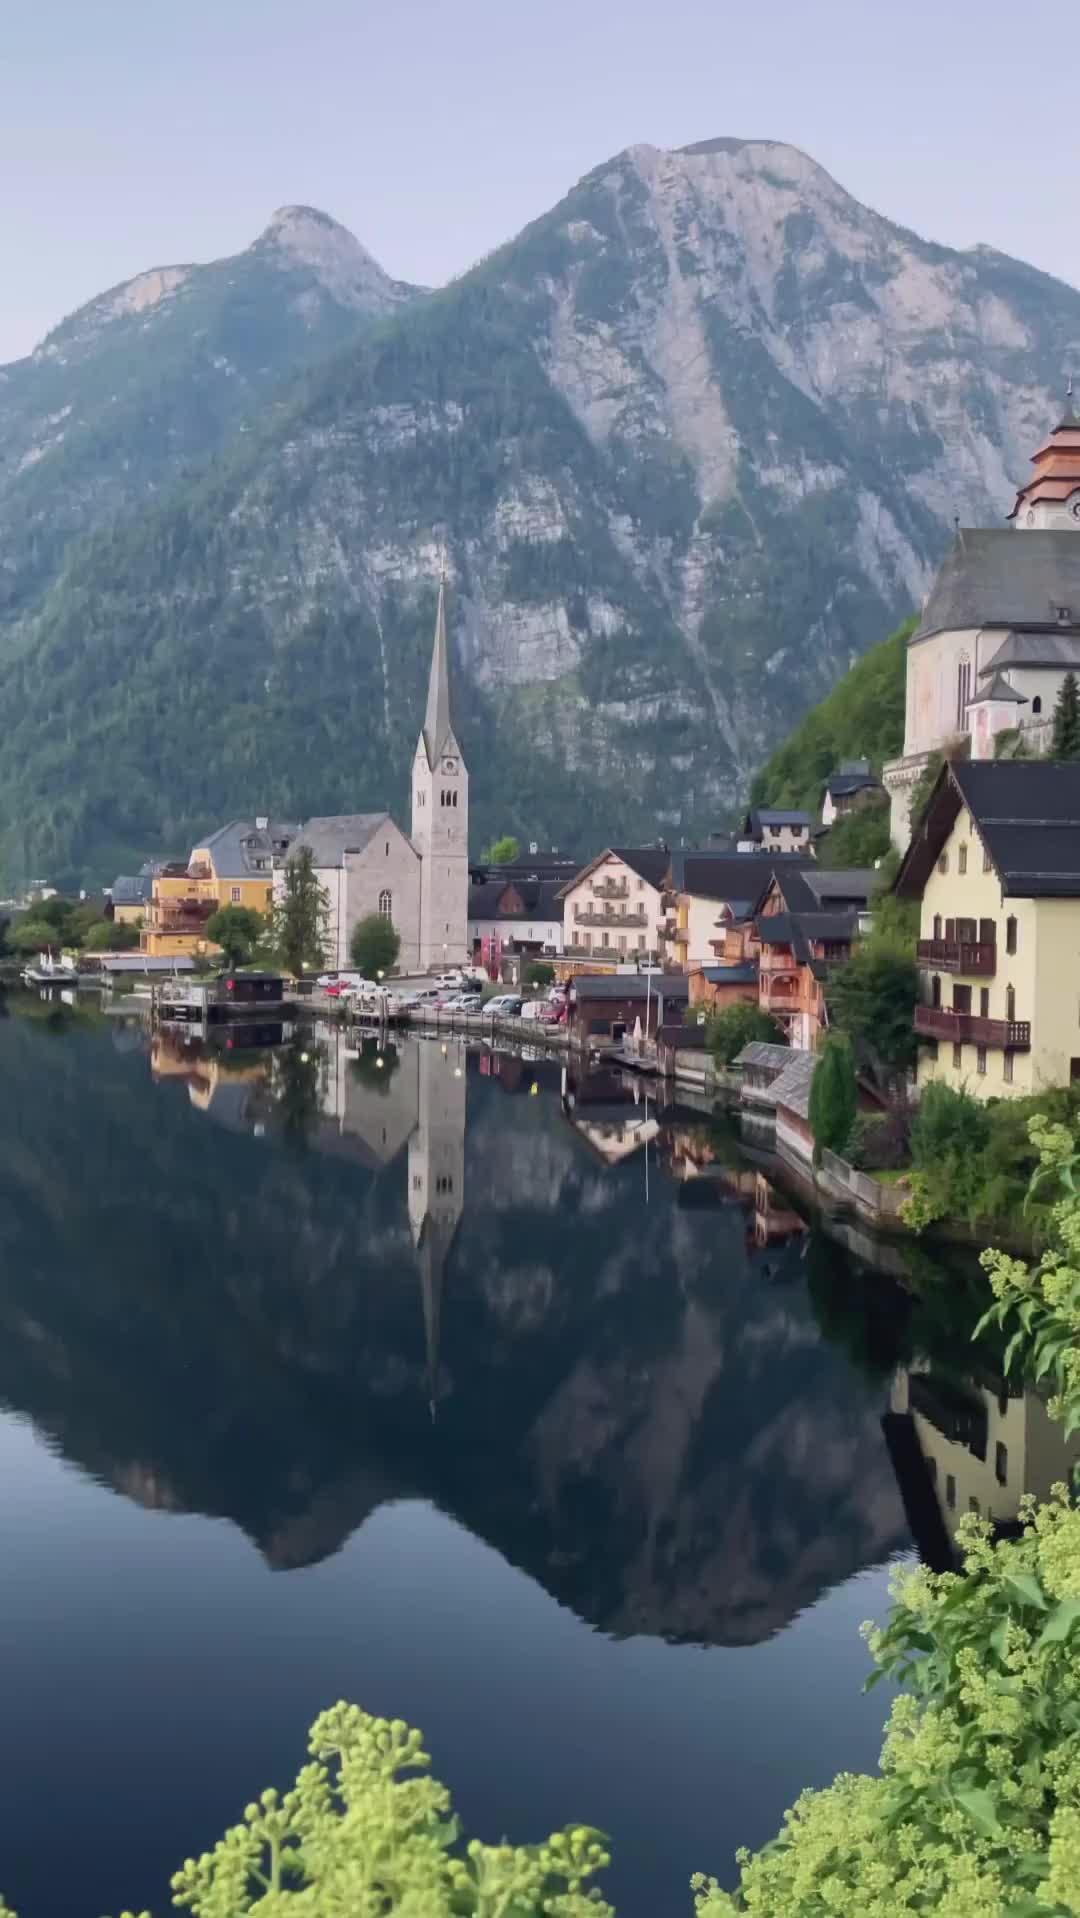 Discover Hallstatt: Austria's Scenic Lakeside Village